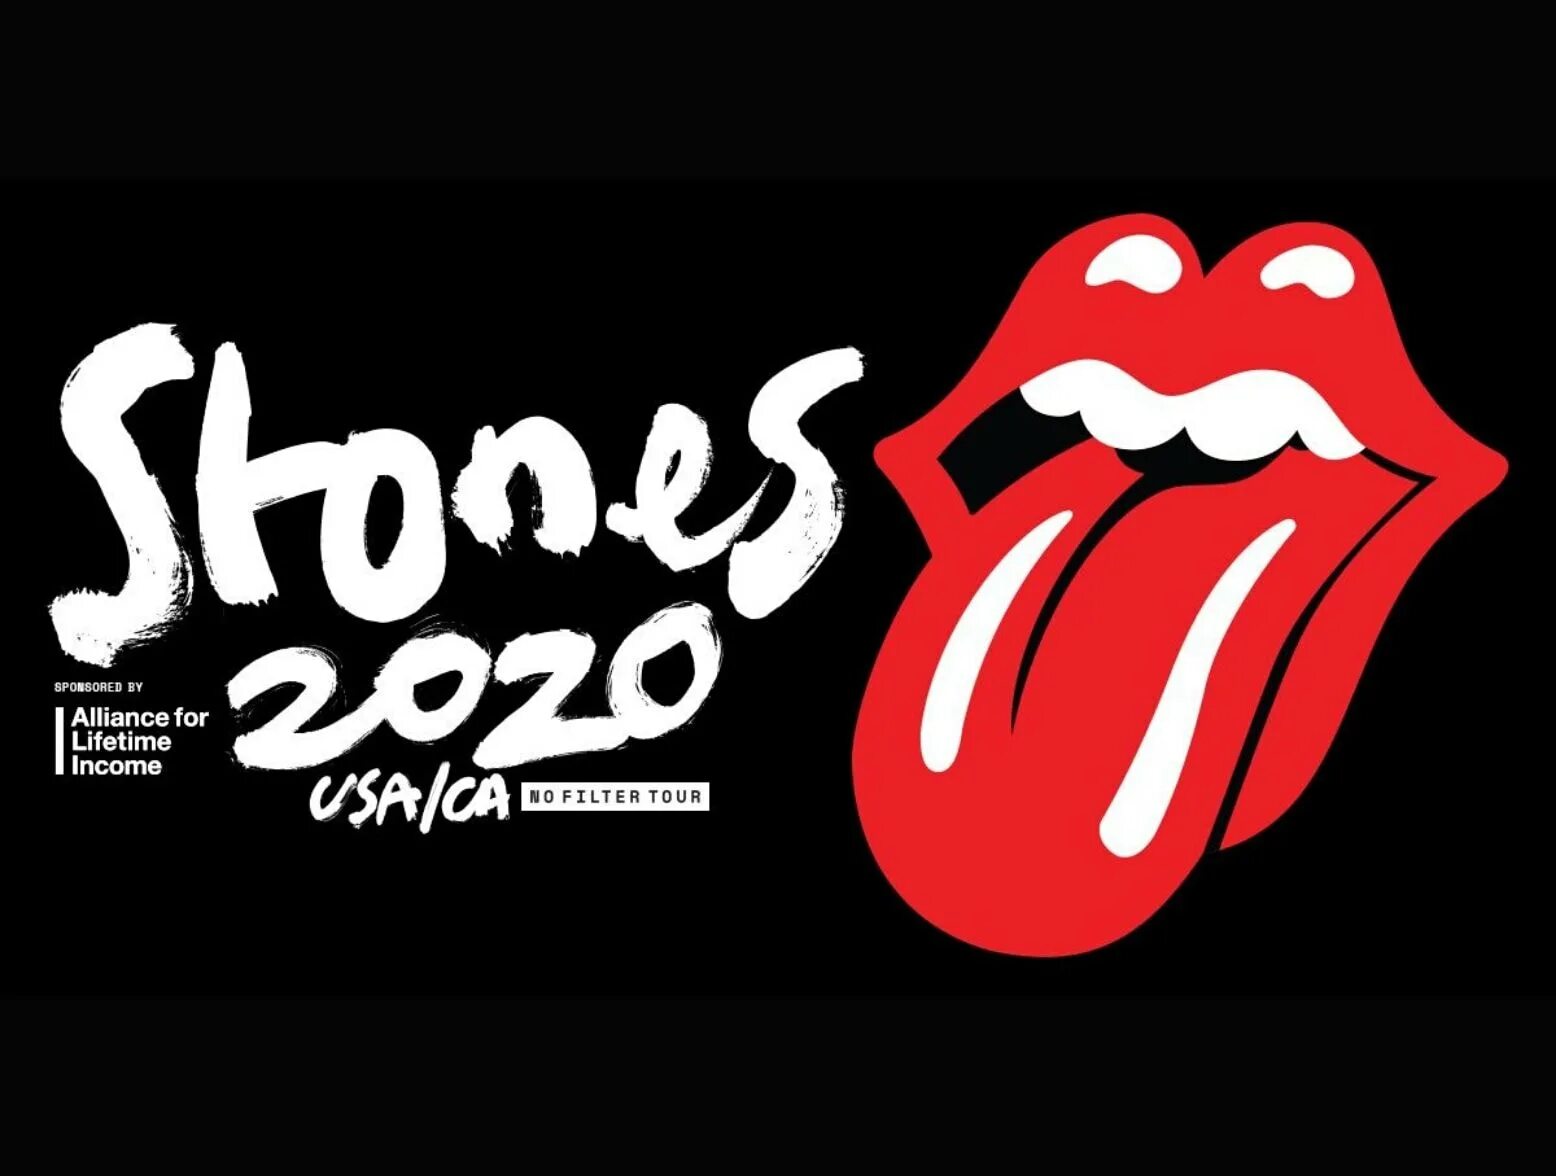 Rolling stones get. Rolling Stones логотип. The Rolling Stones на рабочий стол. Rolling Stones обои на рабочий стол. Обои на рабочий стол Роллинг стоунз.